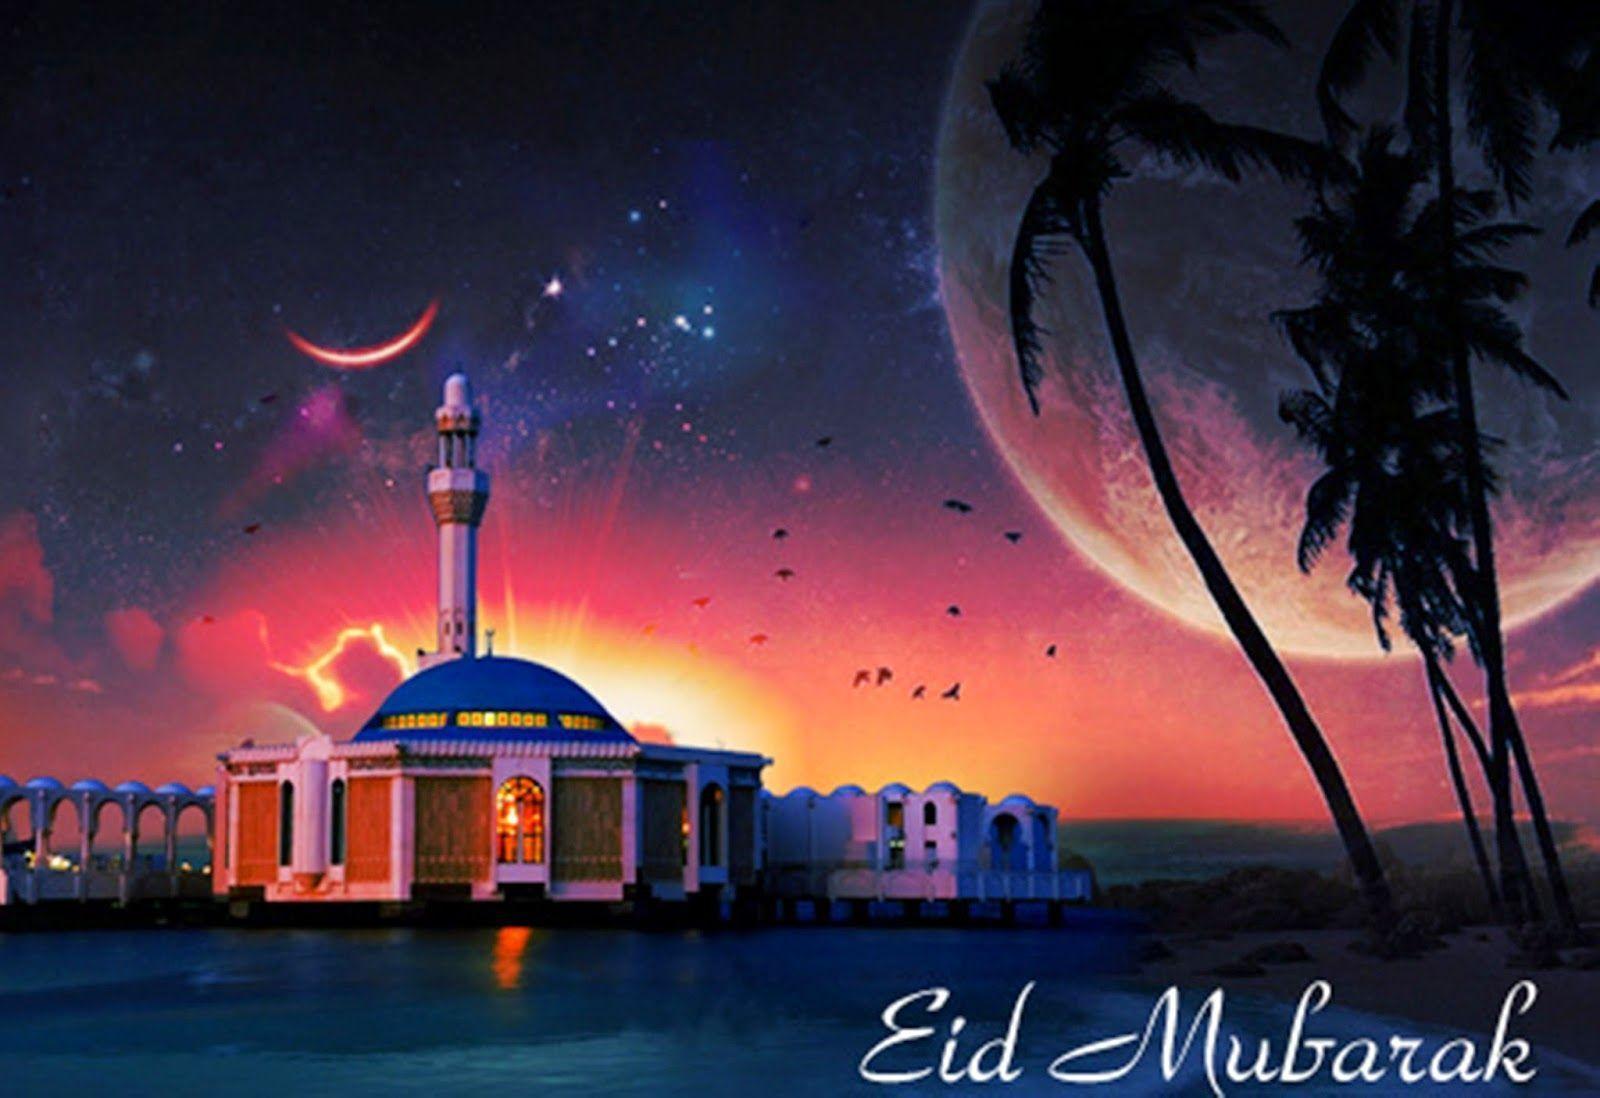 Eid Mubarak images high quality